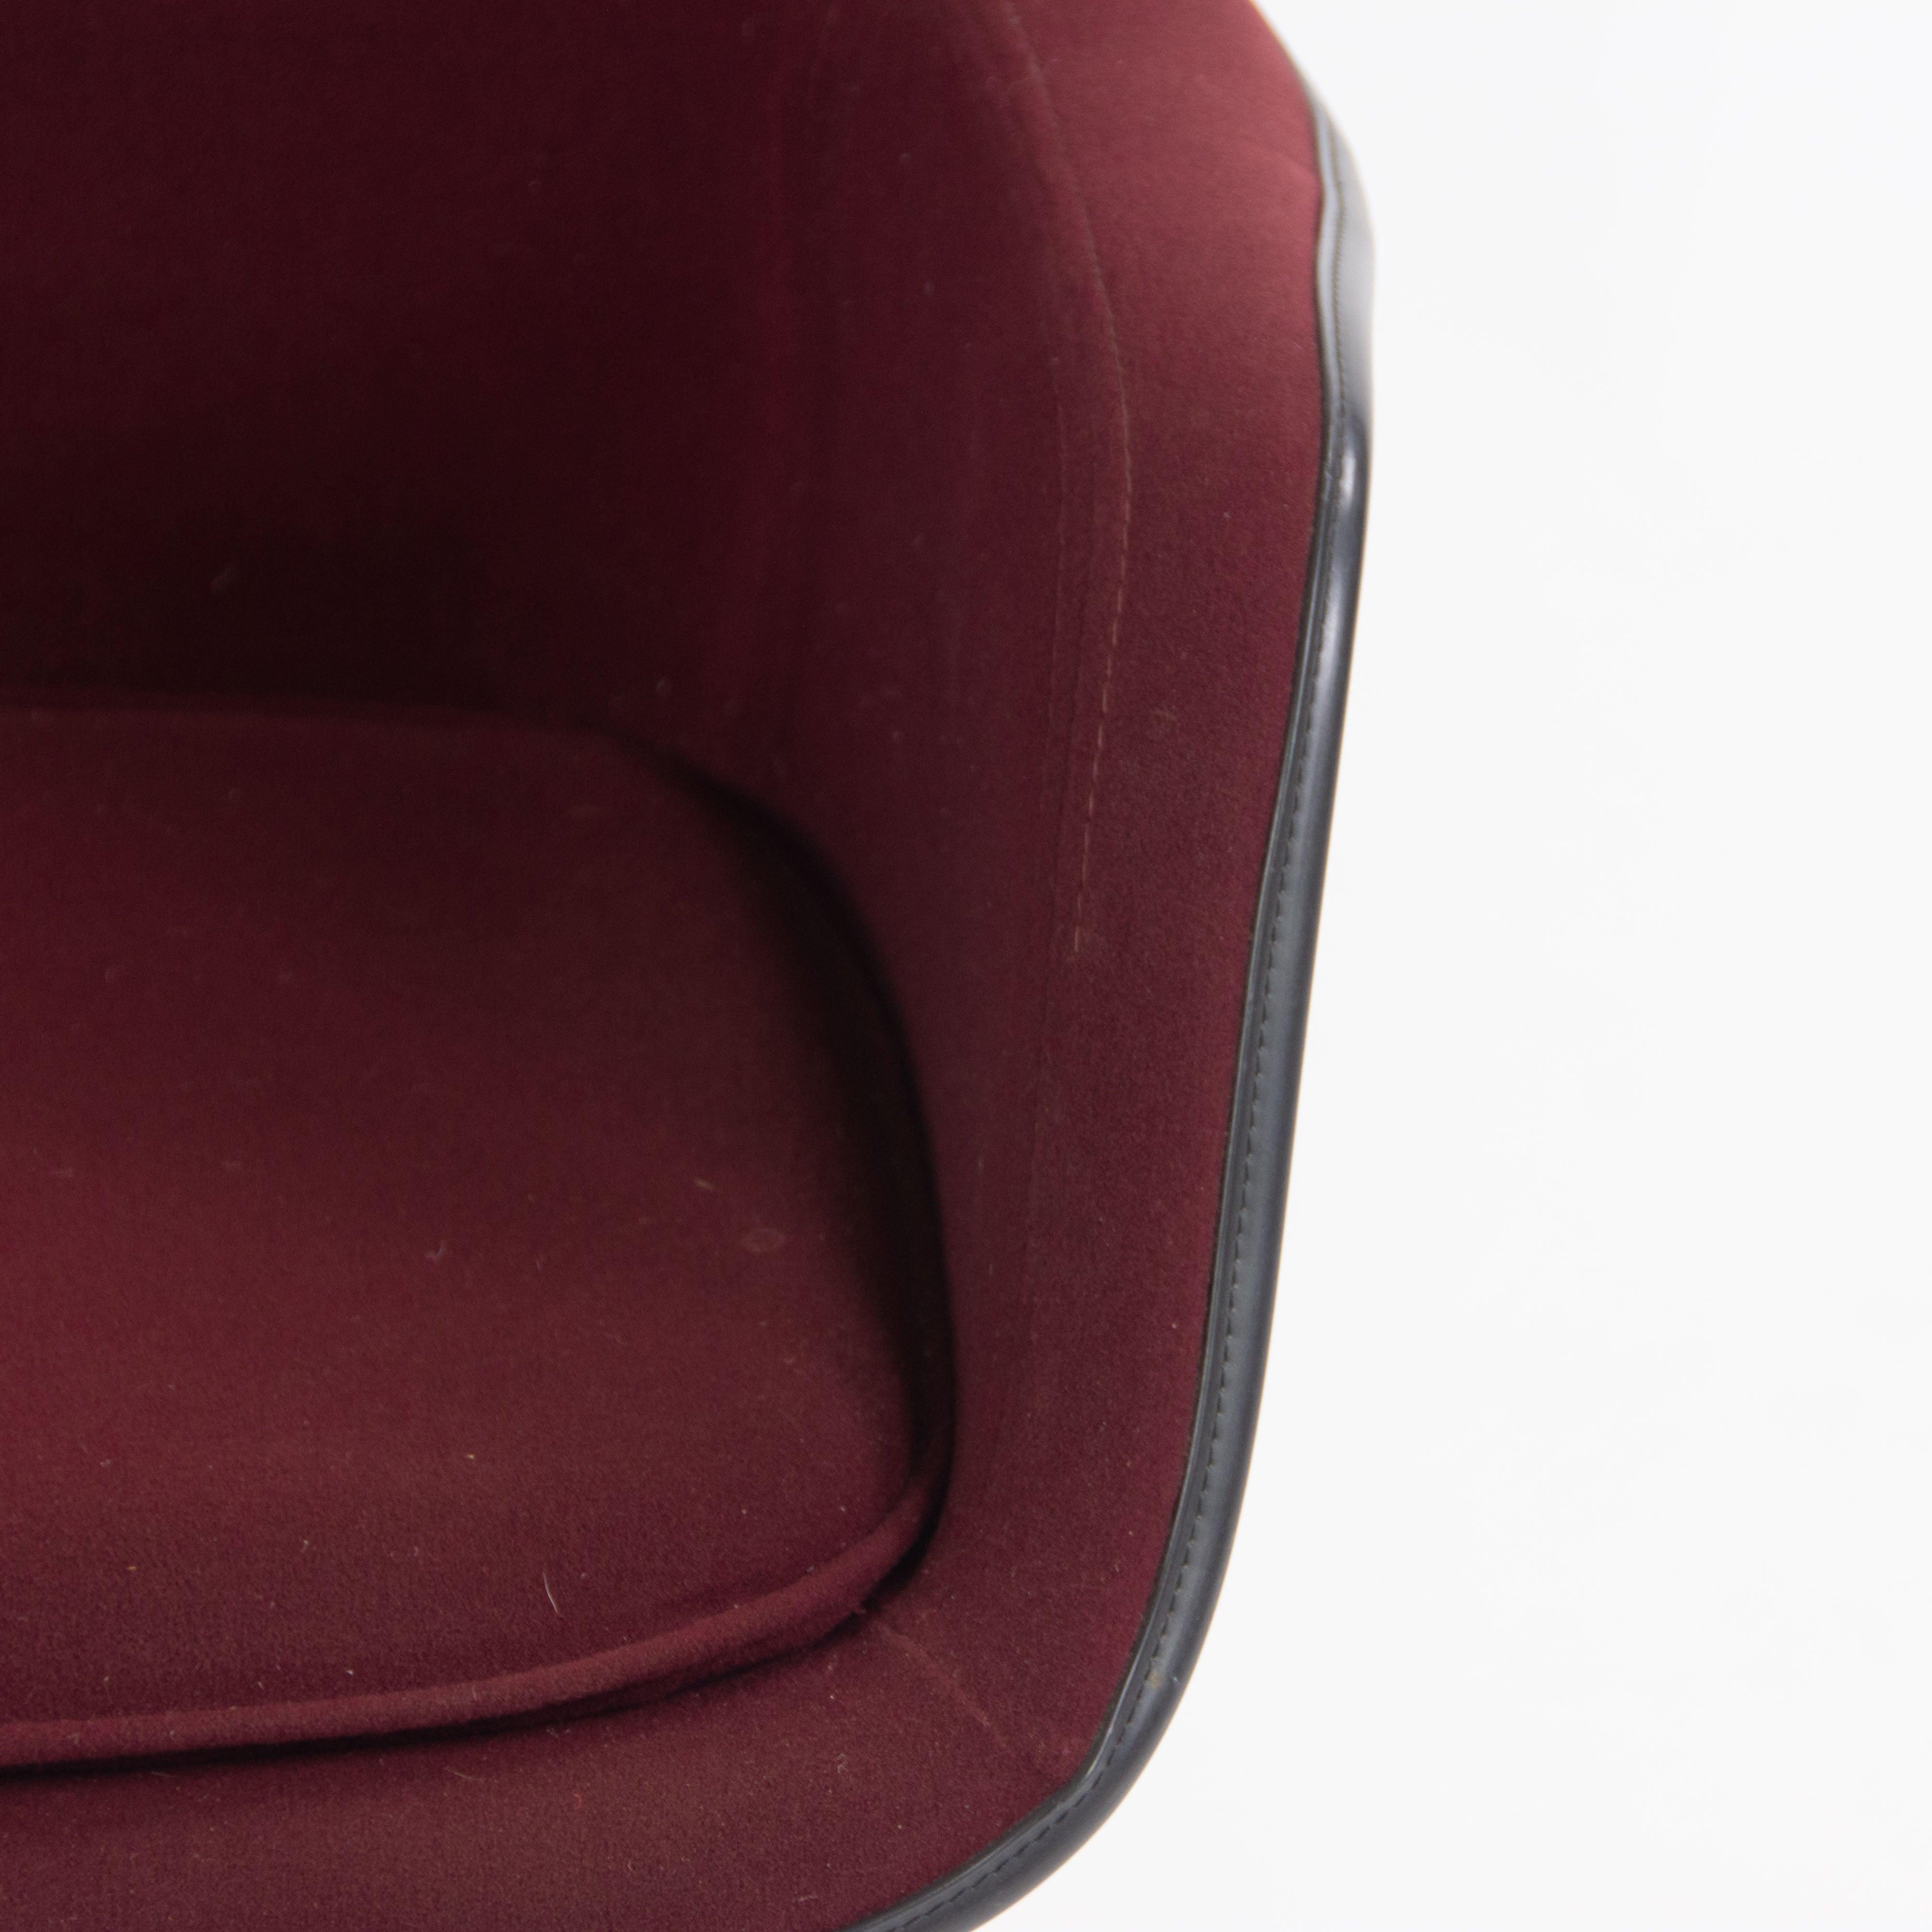 1985 Eames Herman Miller EC175 Upholstered Fiberglass Shell Chair Museum Quality For Sale 3